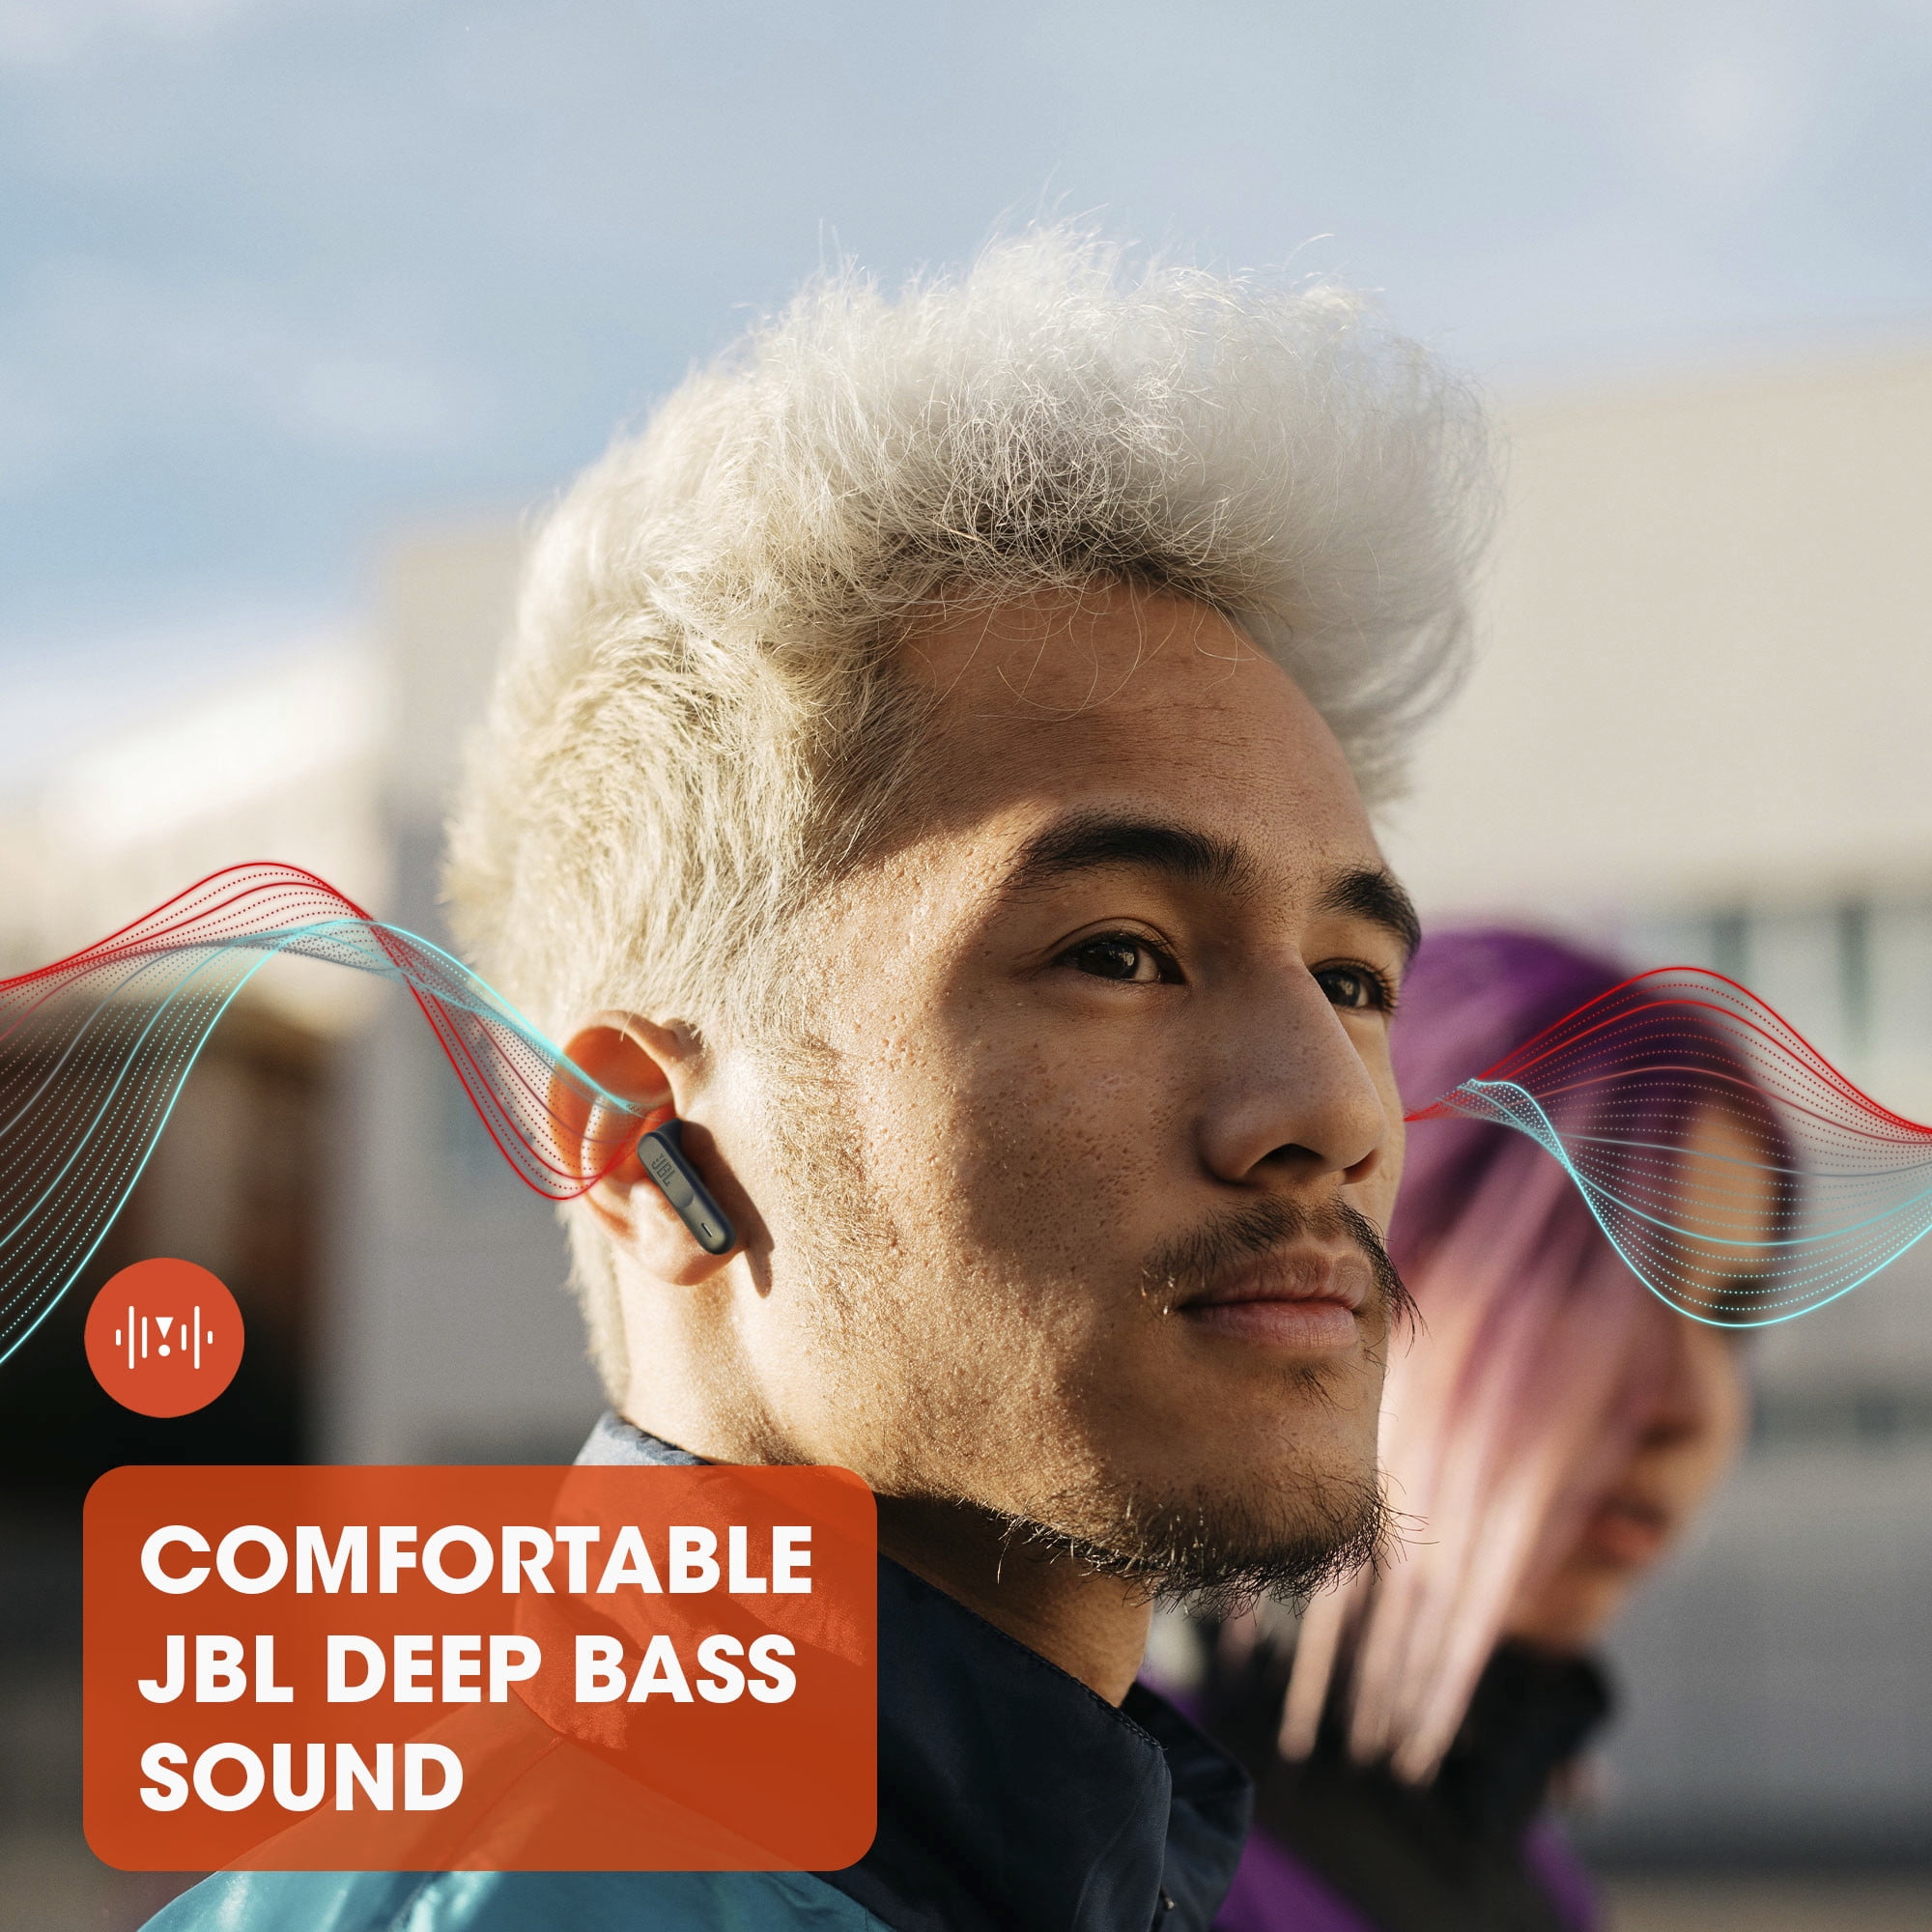 ⭐ Auriculares inalámbricos Bluetooth in-ear JBL Wave 300 